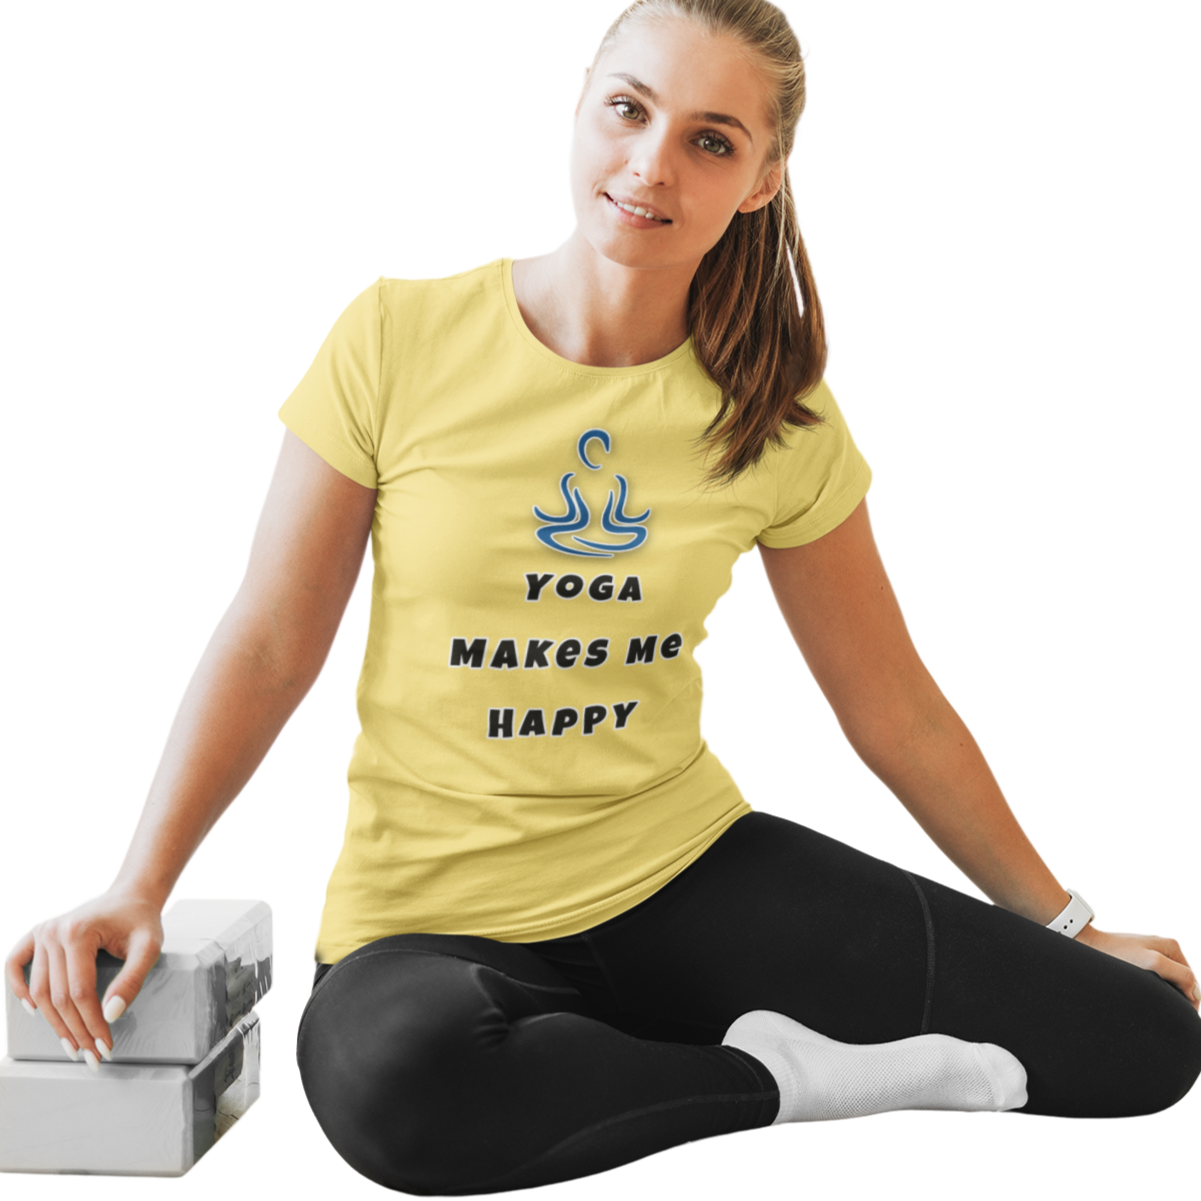 Yoga Makes Me Happy T Shirt for Women D79